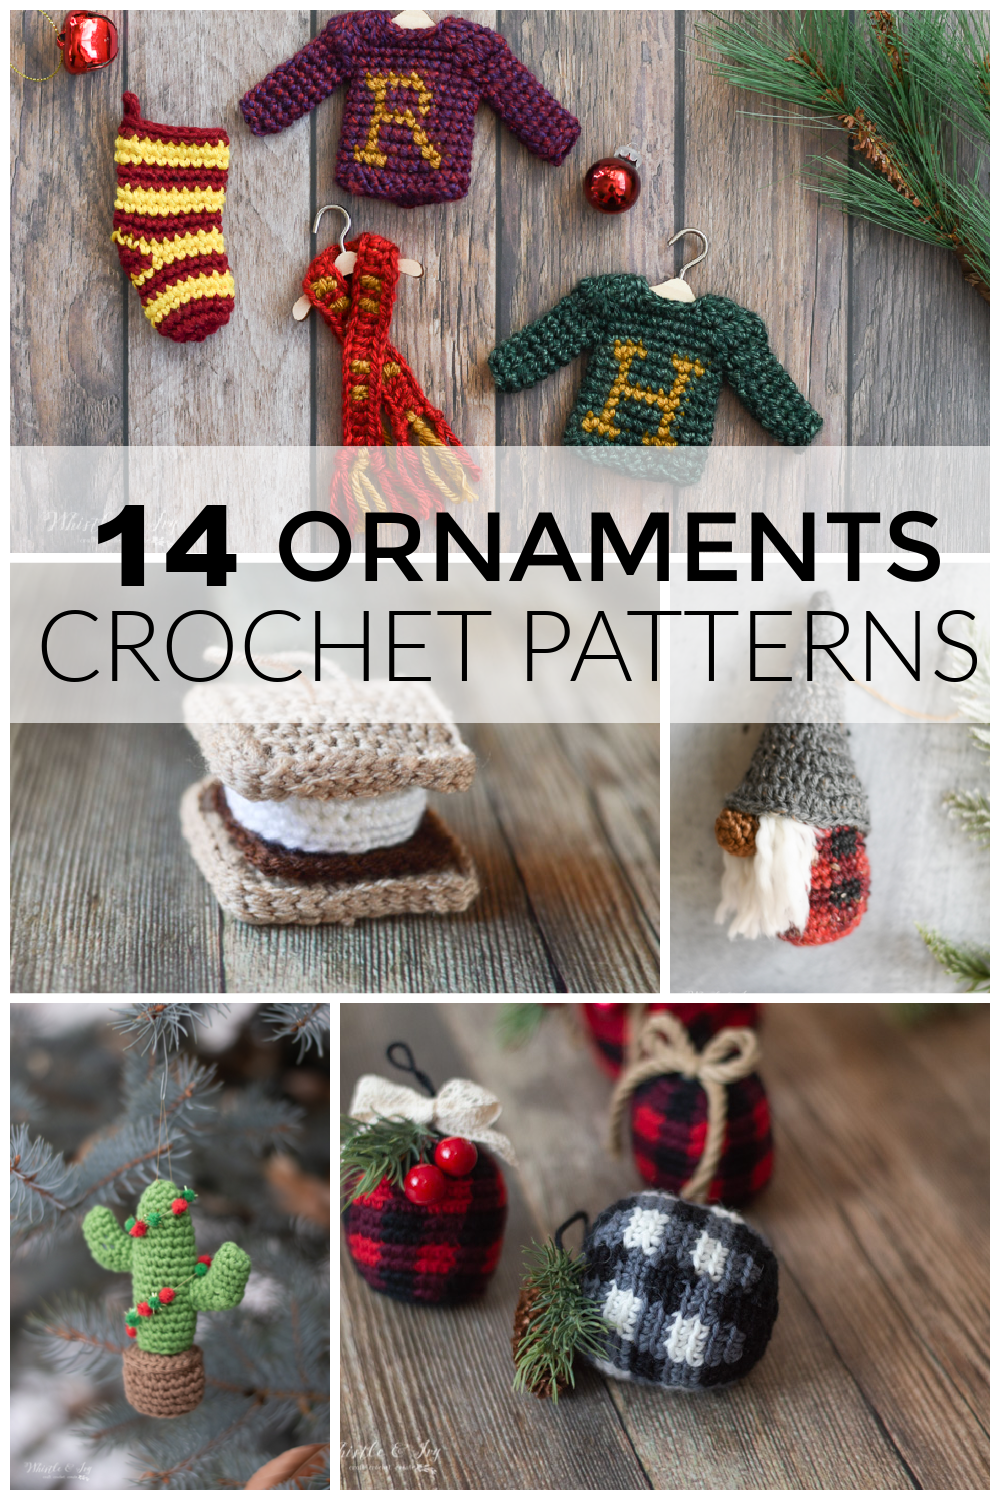 14 Pretty Crochet Ornament Patterns to Make Today